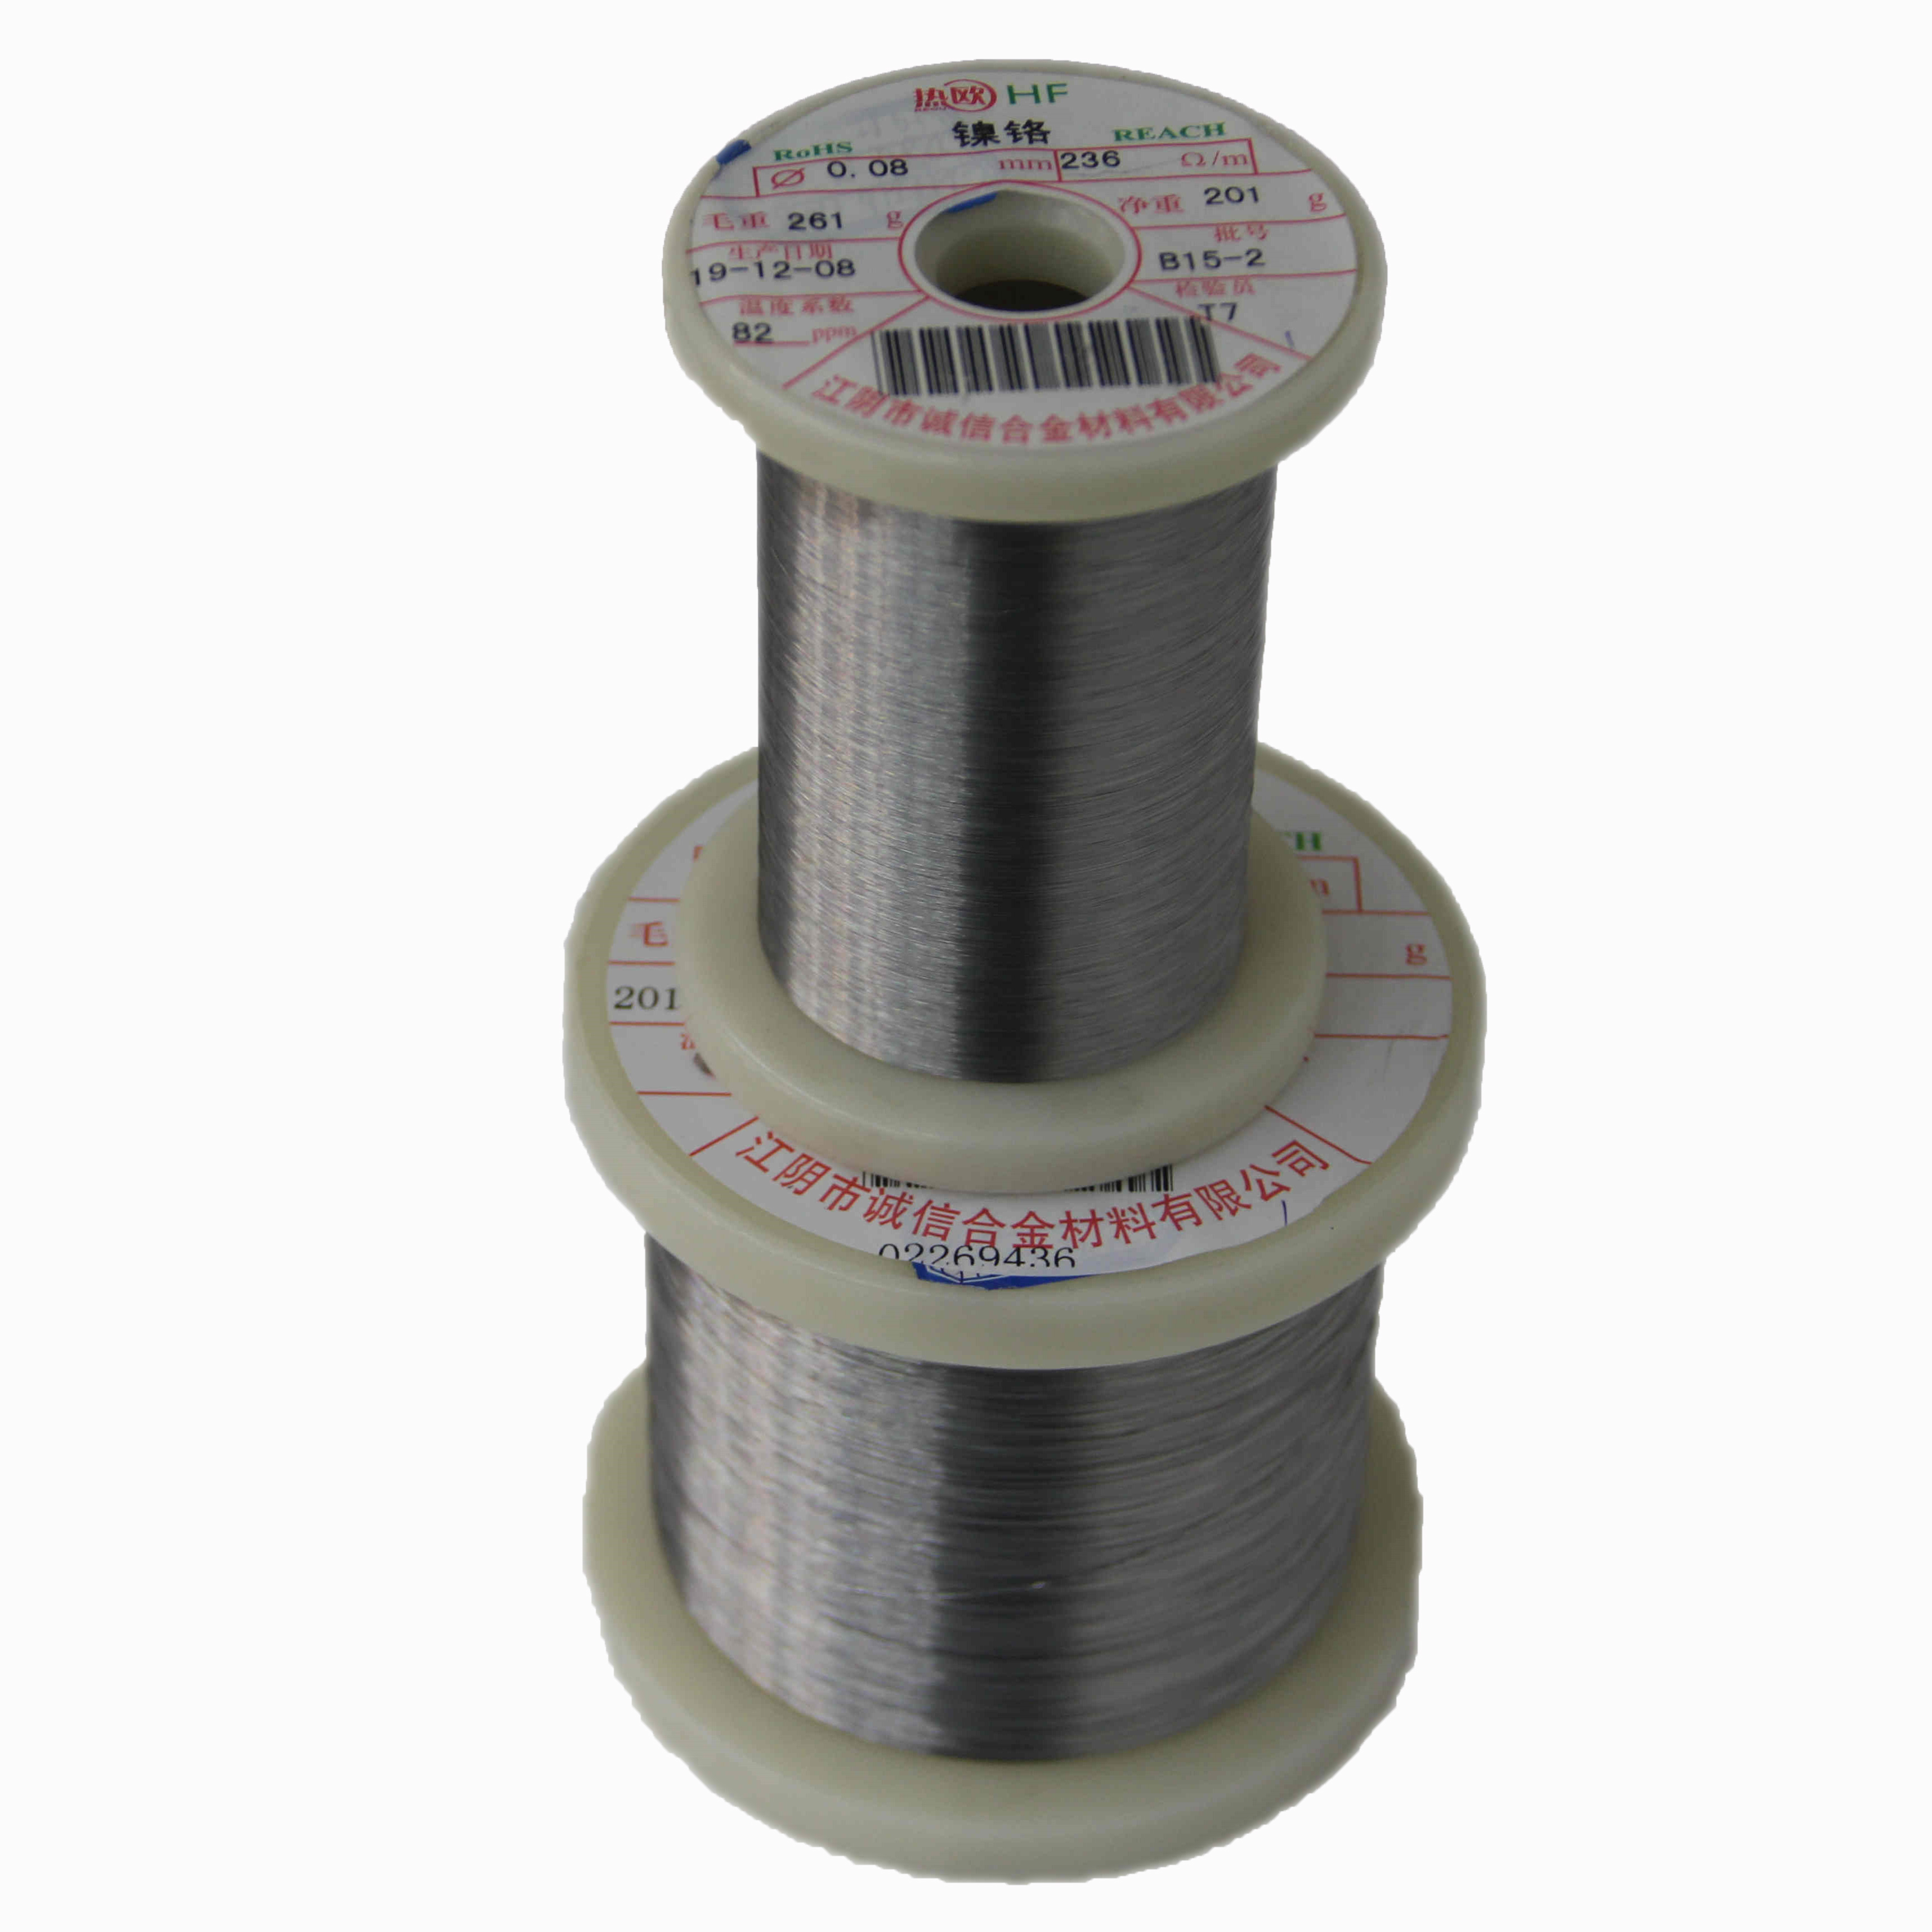 Cr20Ni35 Nickel-Chromium alloy wire